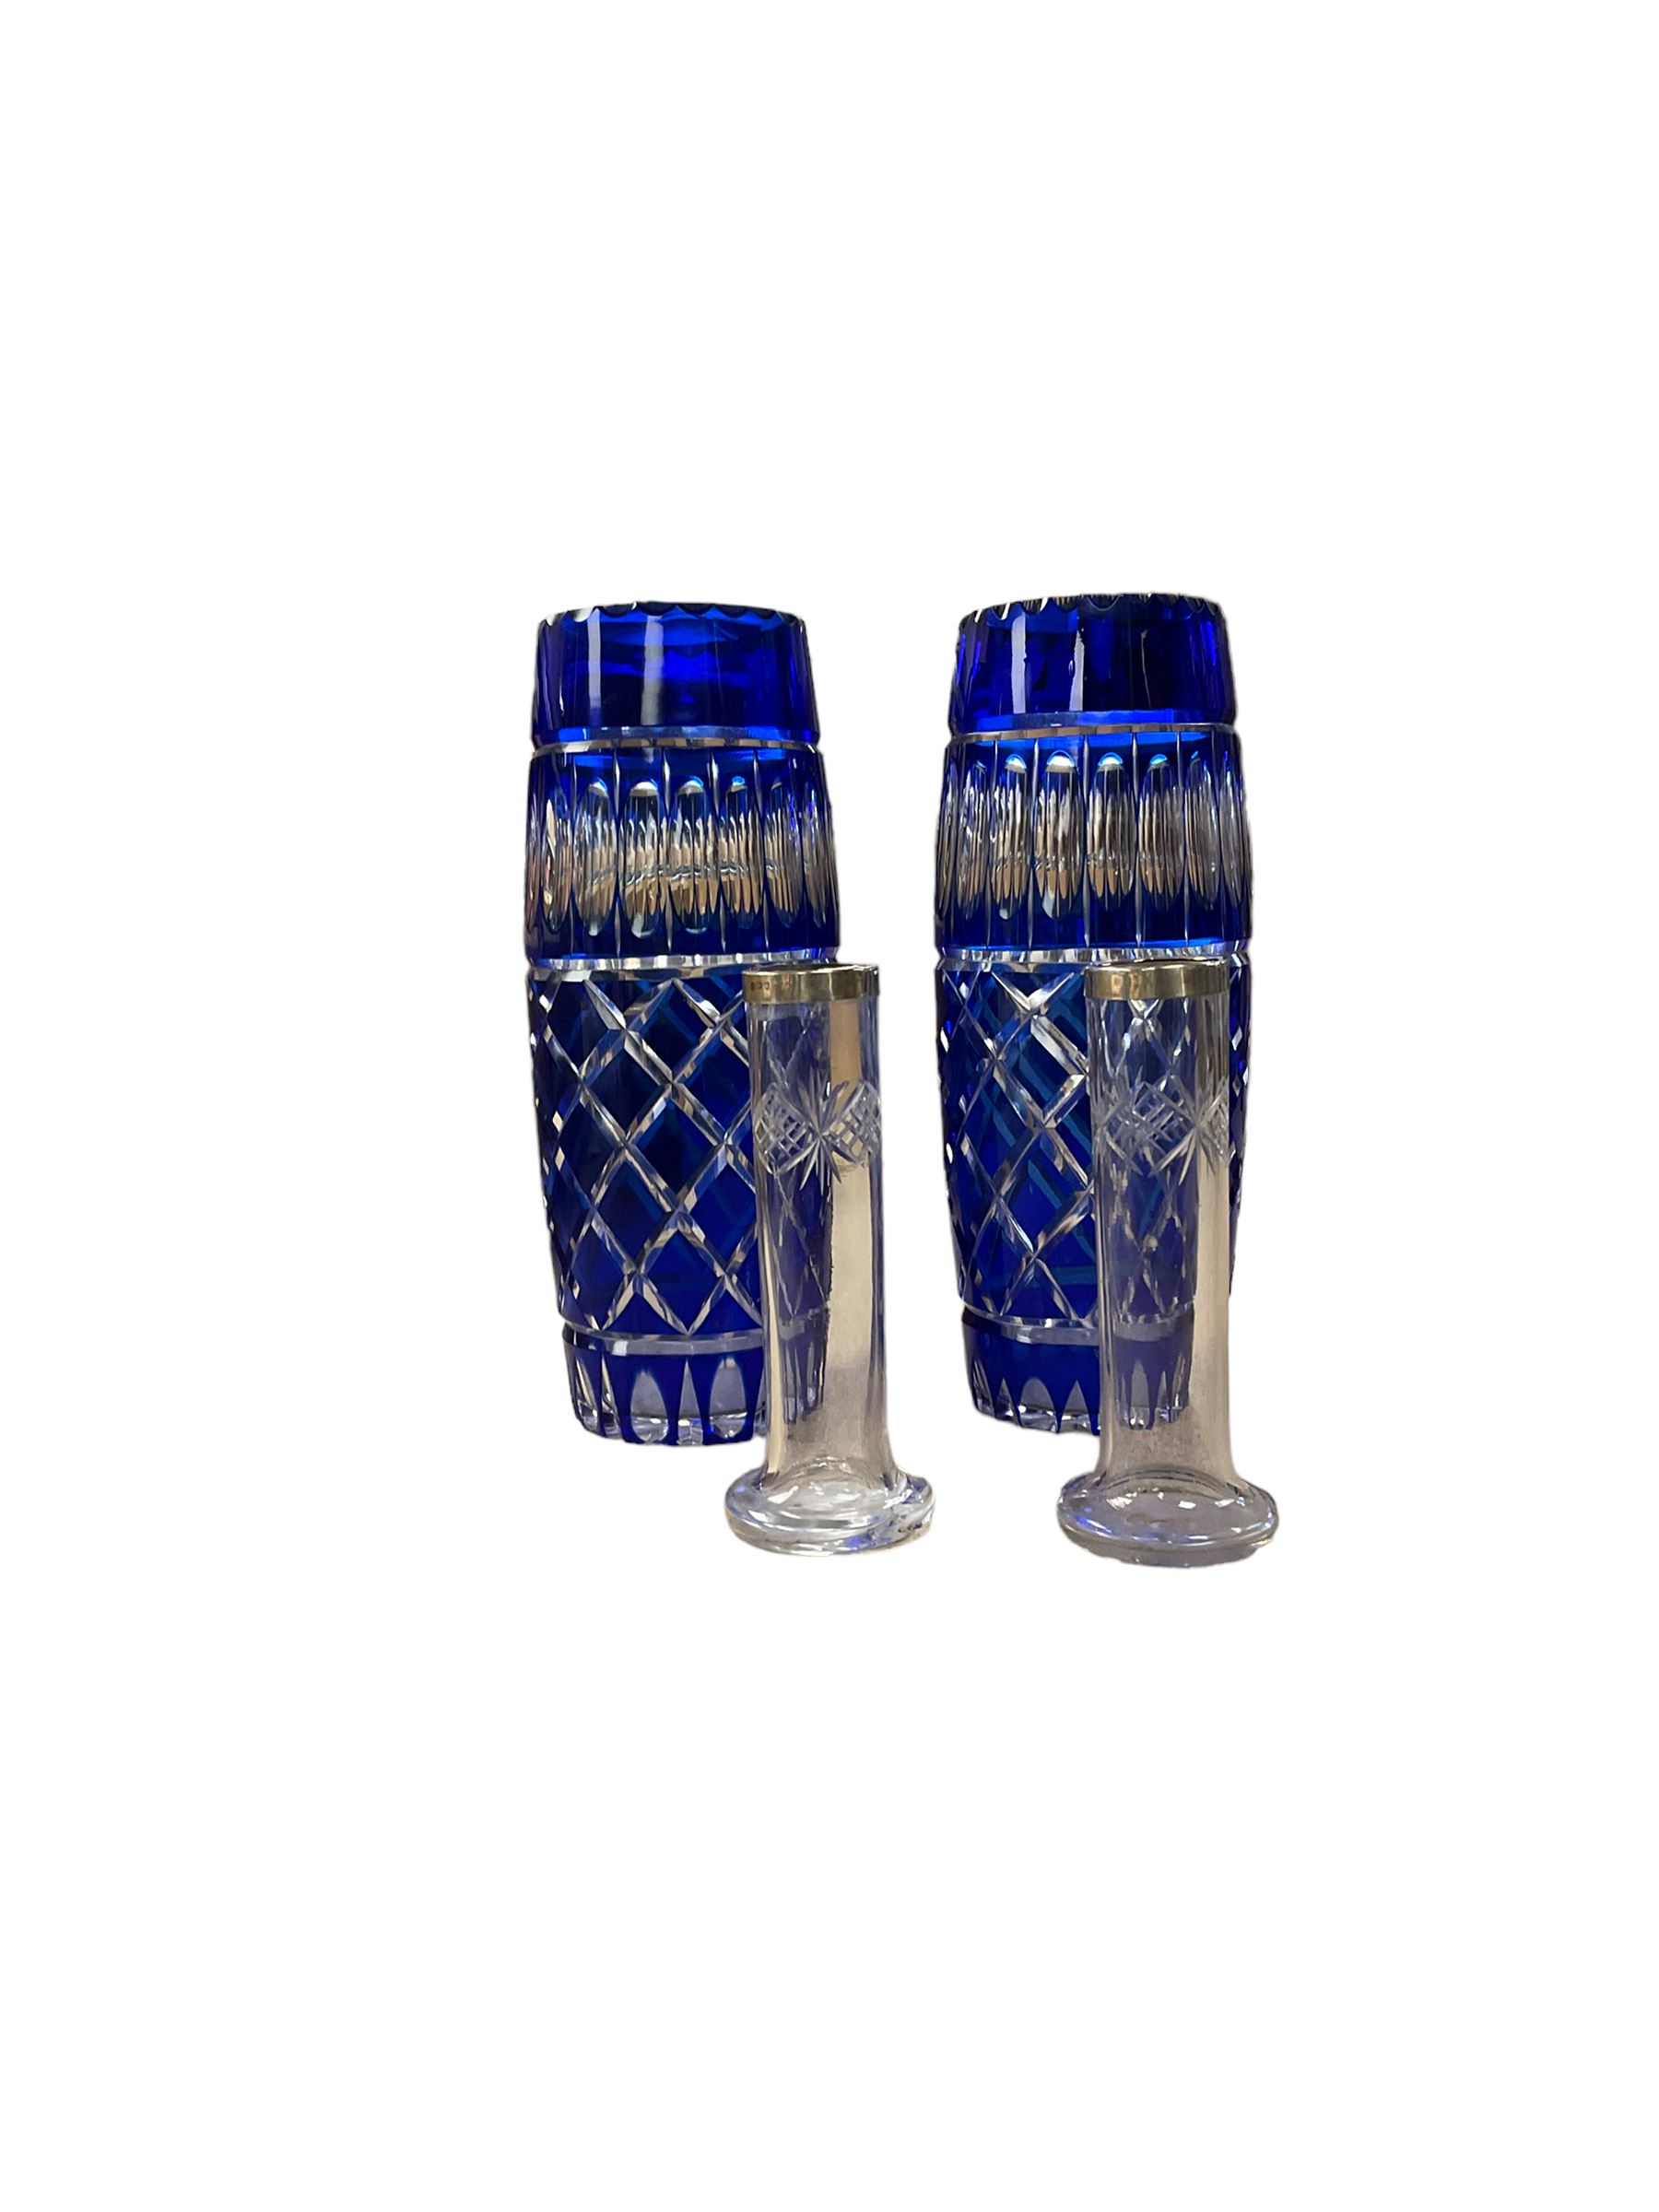 Pair of blue cut glass vases